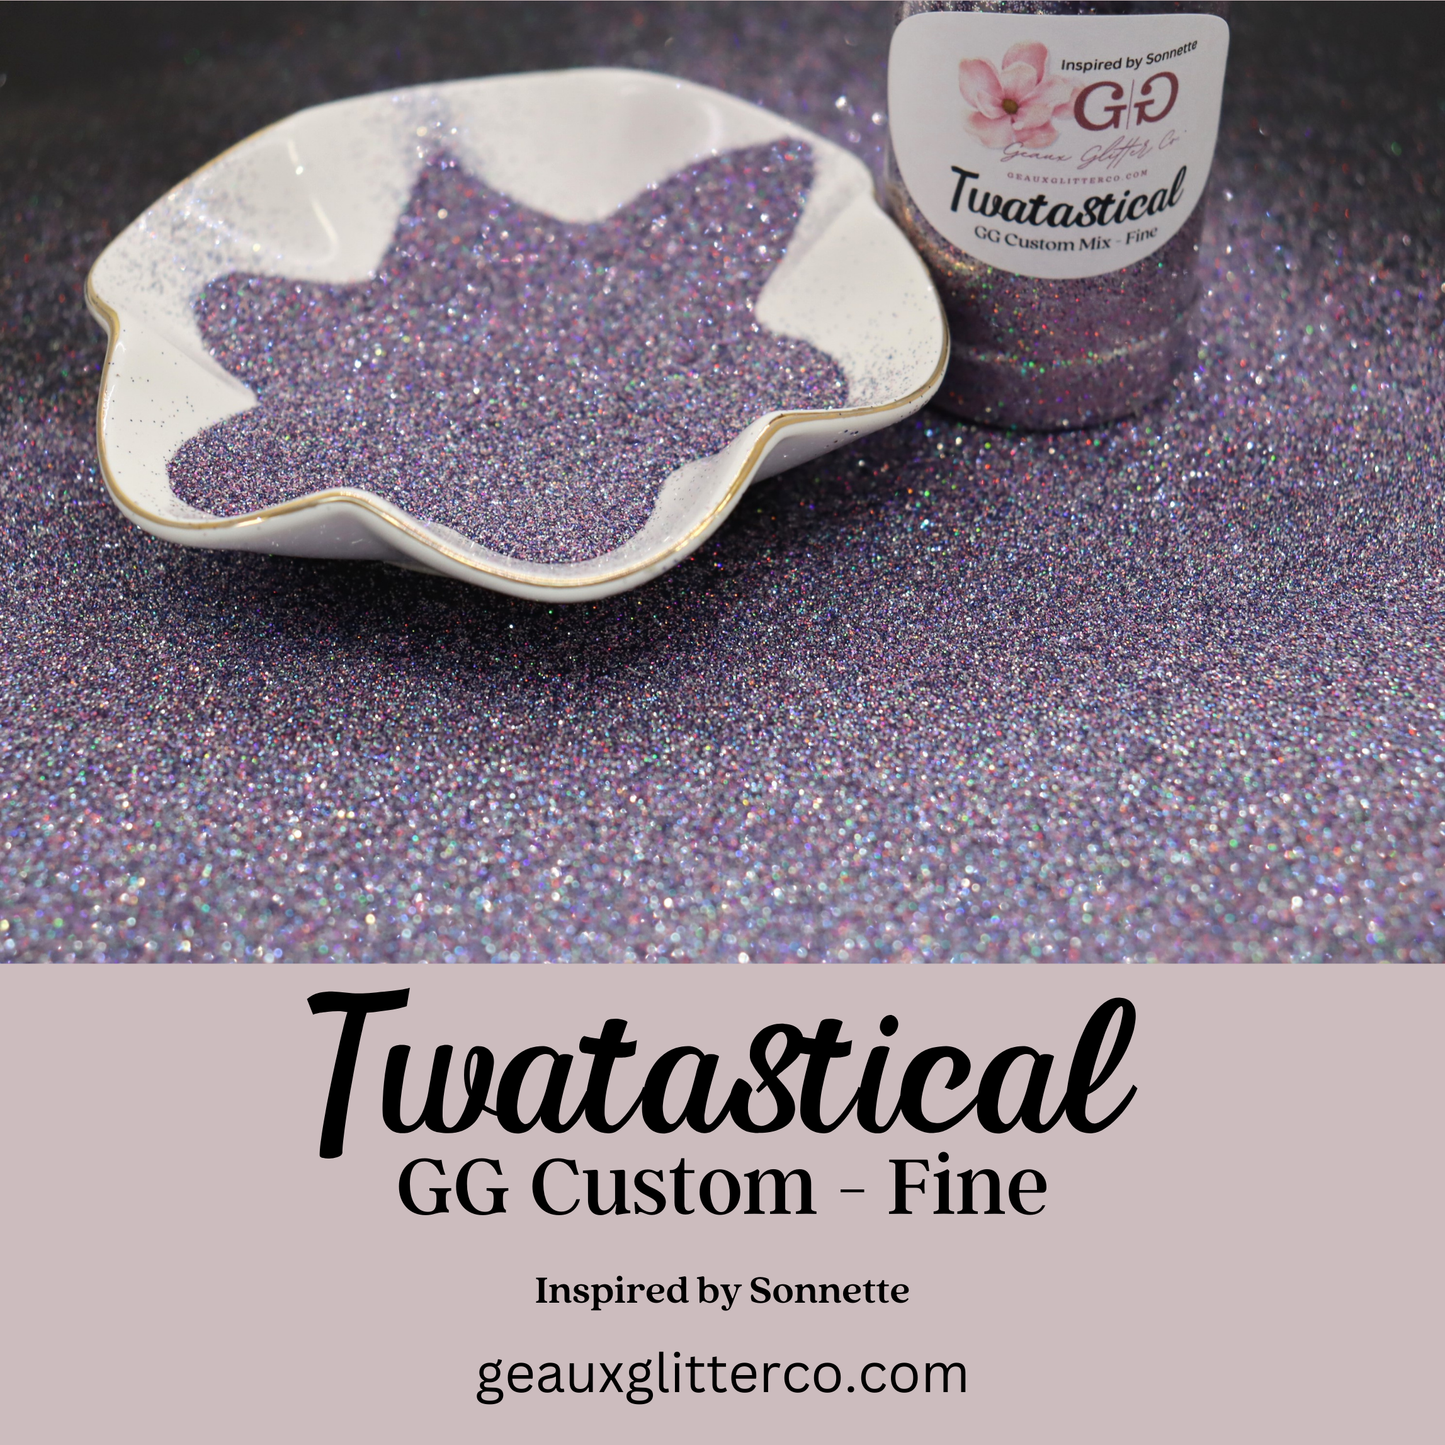 Twatastical - GG Custom Fine (Inspired by Sonnette)